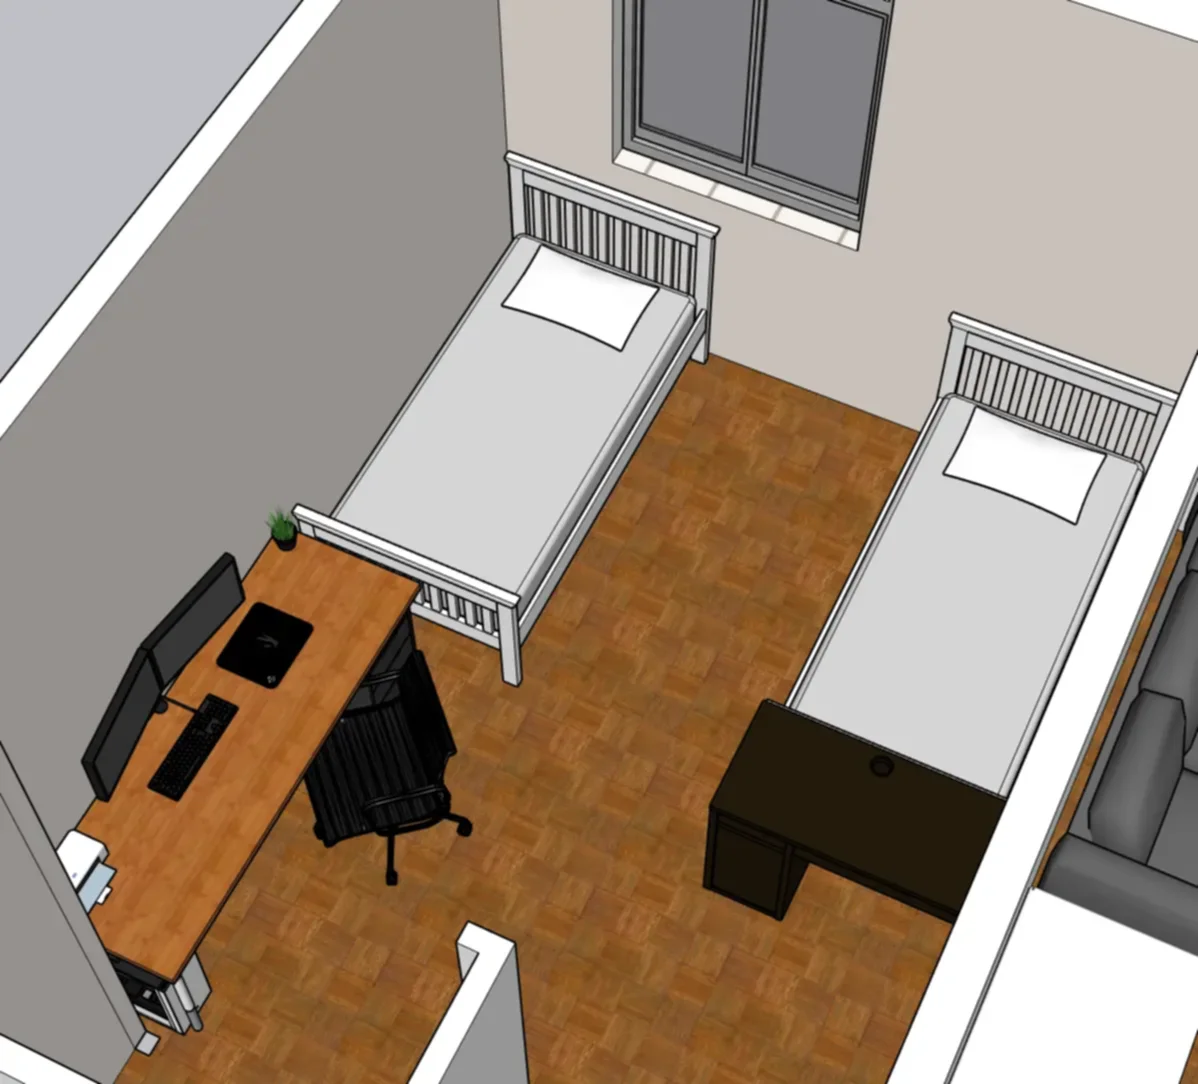 Design of my bedroom in Google Sketchup.